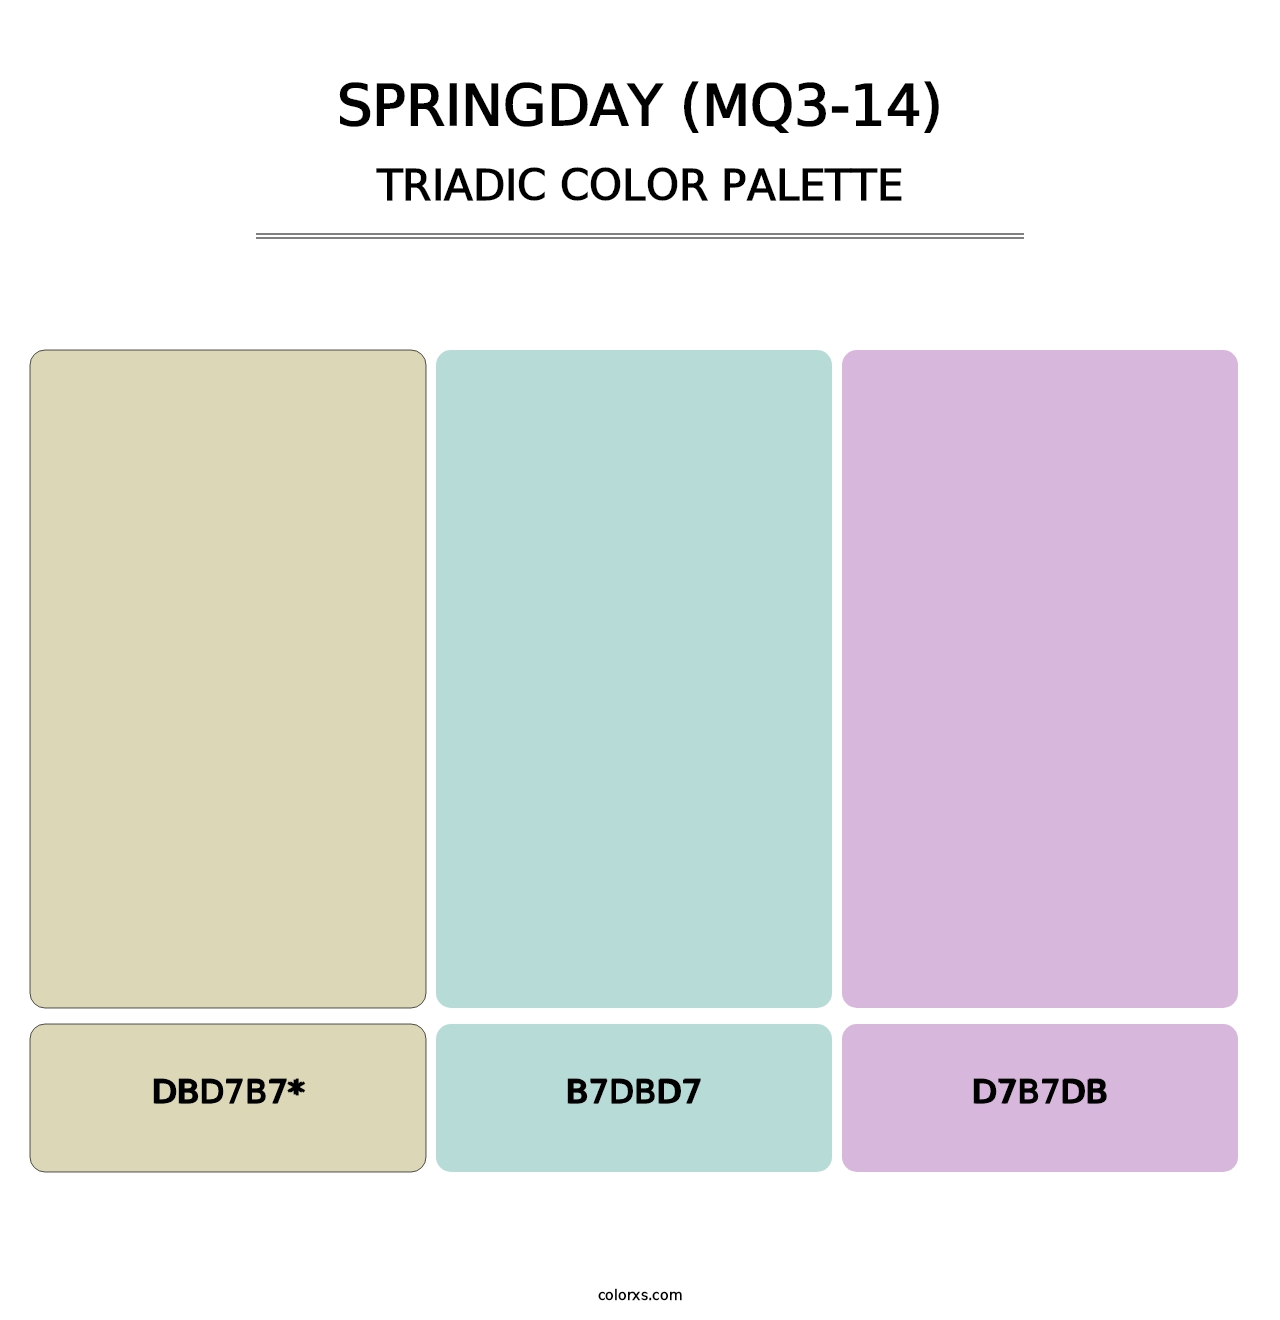 Springday (MQ3-14) - Triadic Color Palette